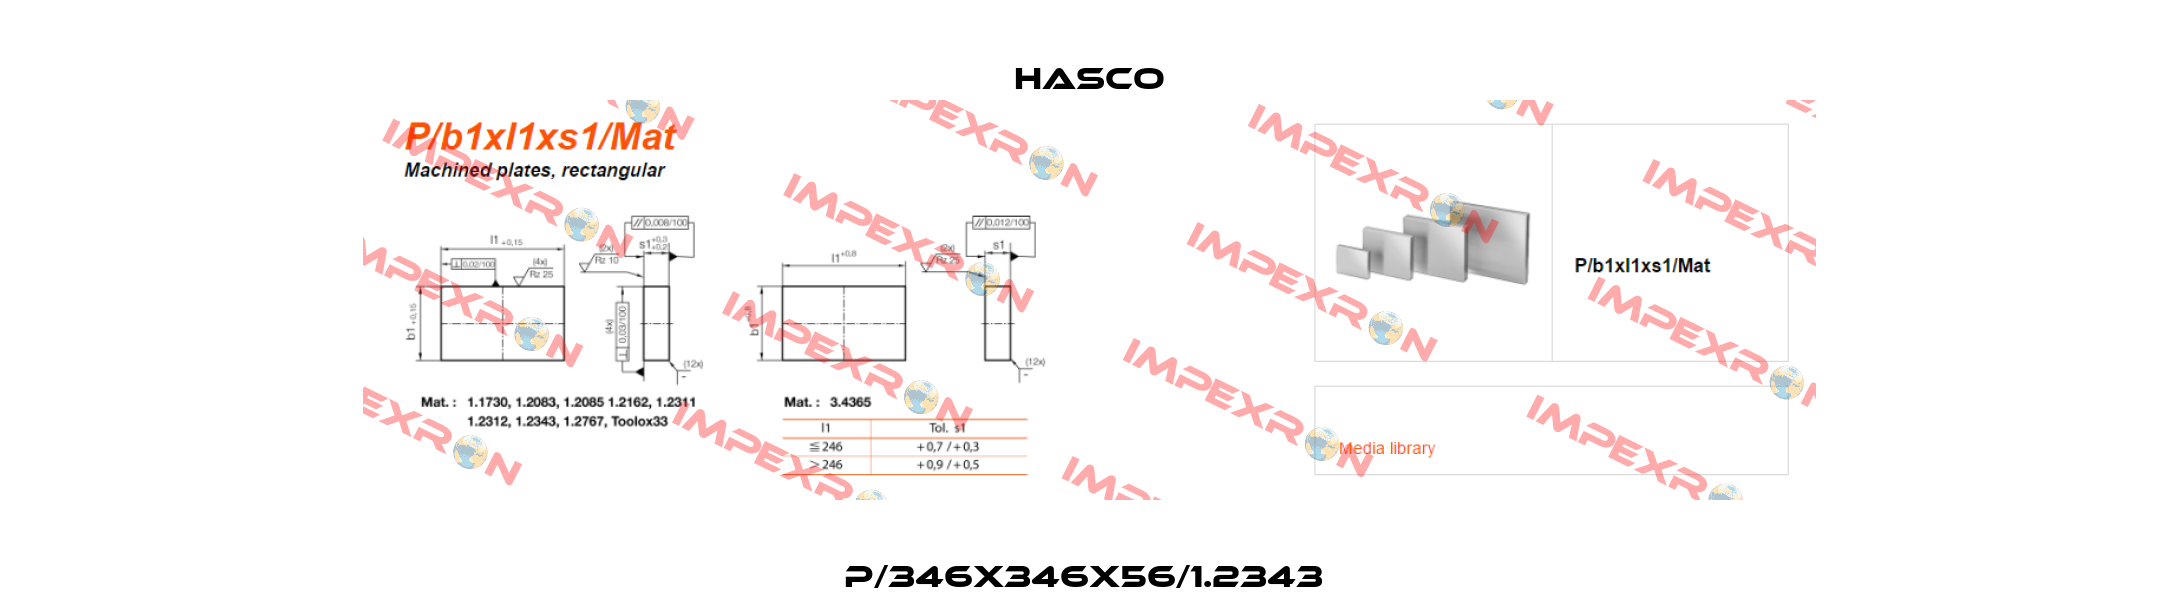 P/346x346x56/1.2343  Hasco